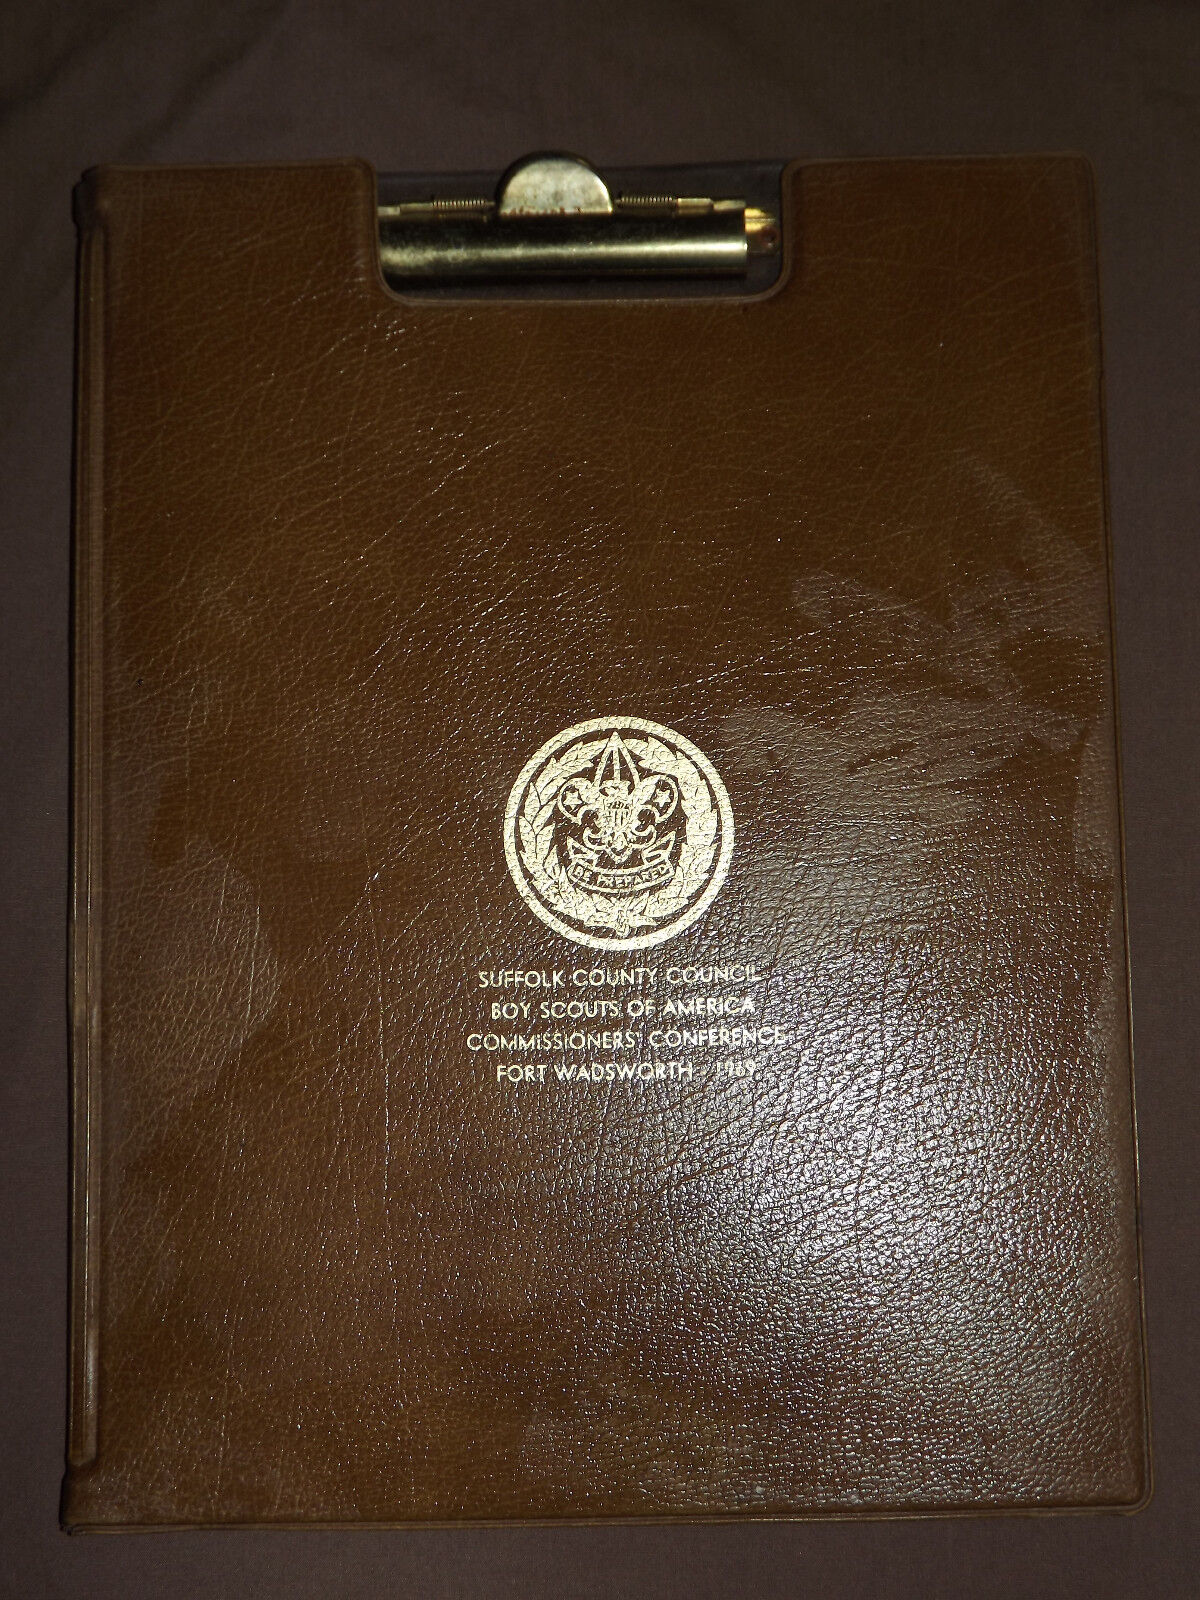 VINTAGE BSA BOY SCOUTS BOOK 1969 SUFFOLK COUNTY COUNCIL CLIP BOARD